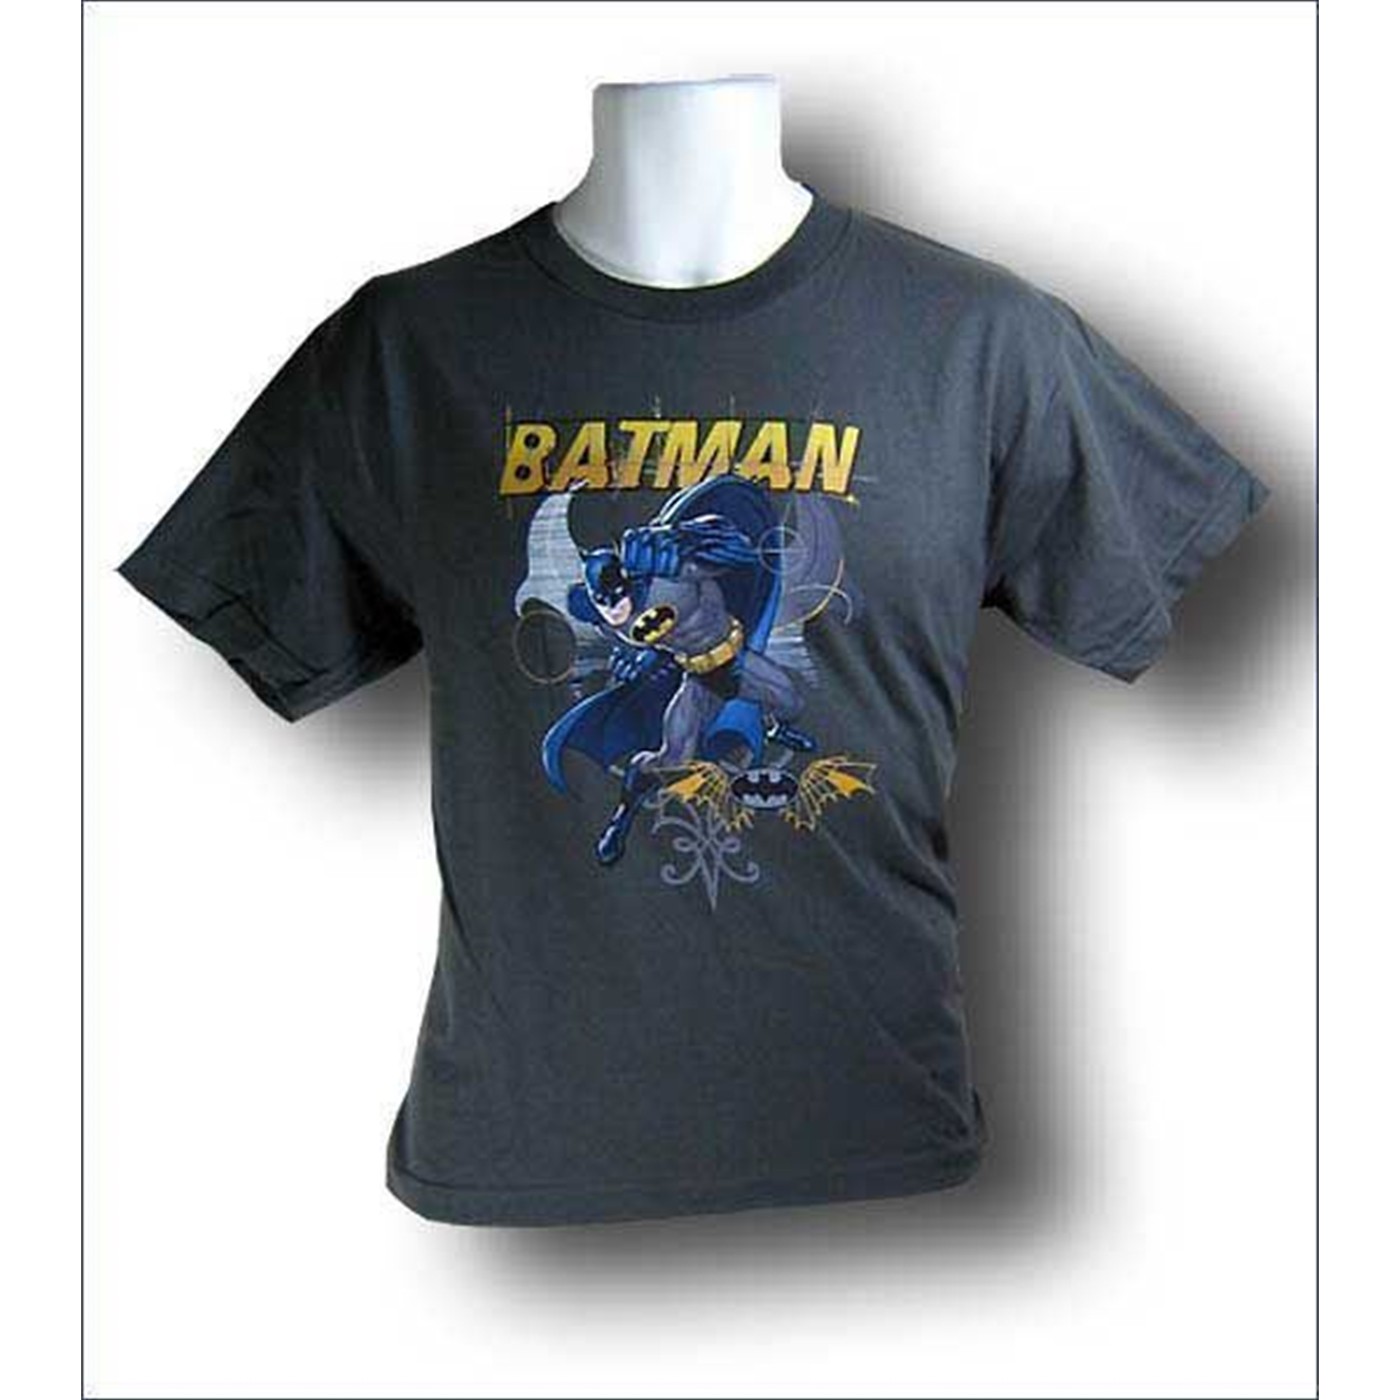 Batman Youth Kids T-Shirt Urban Gothic